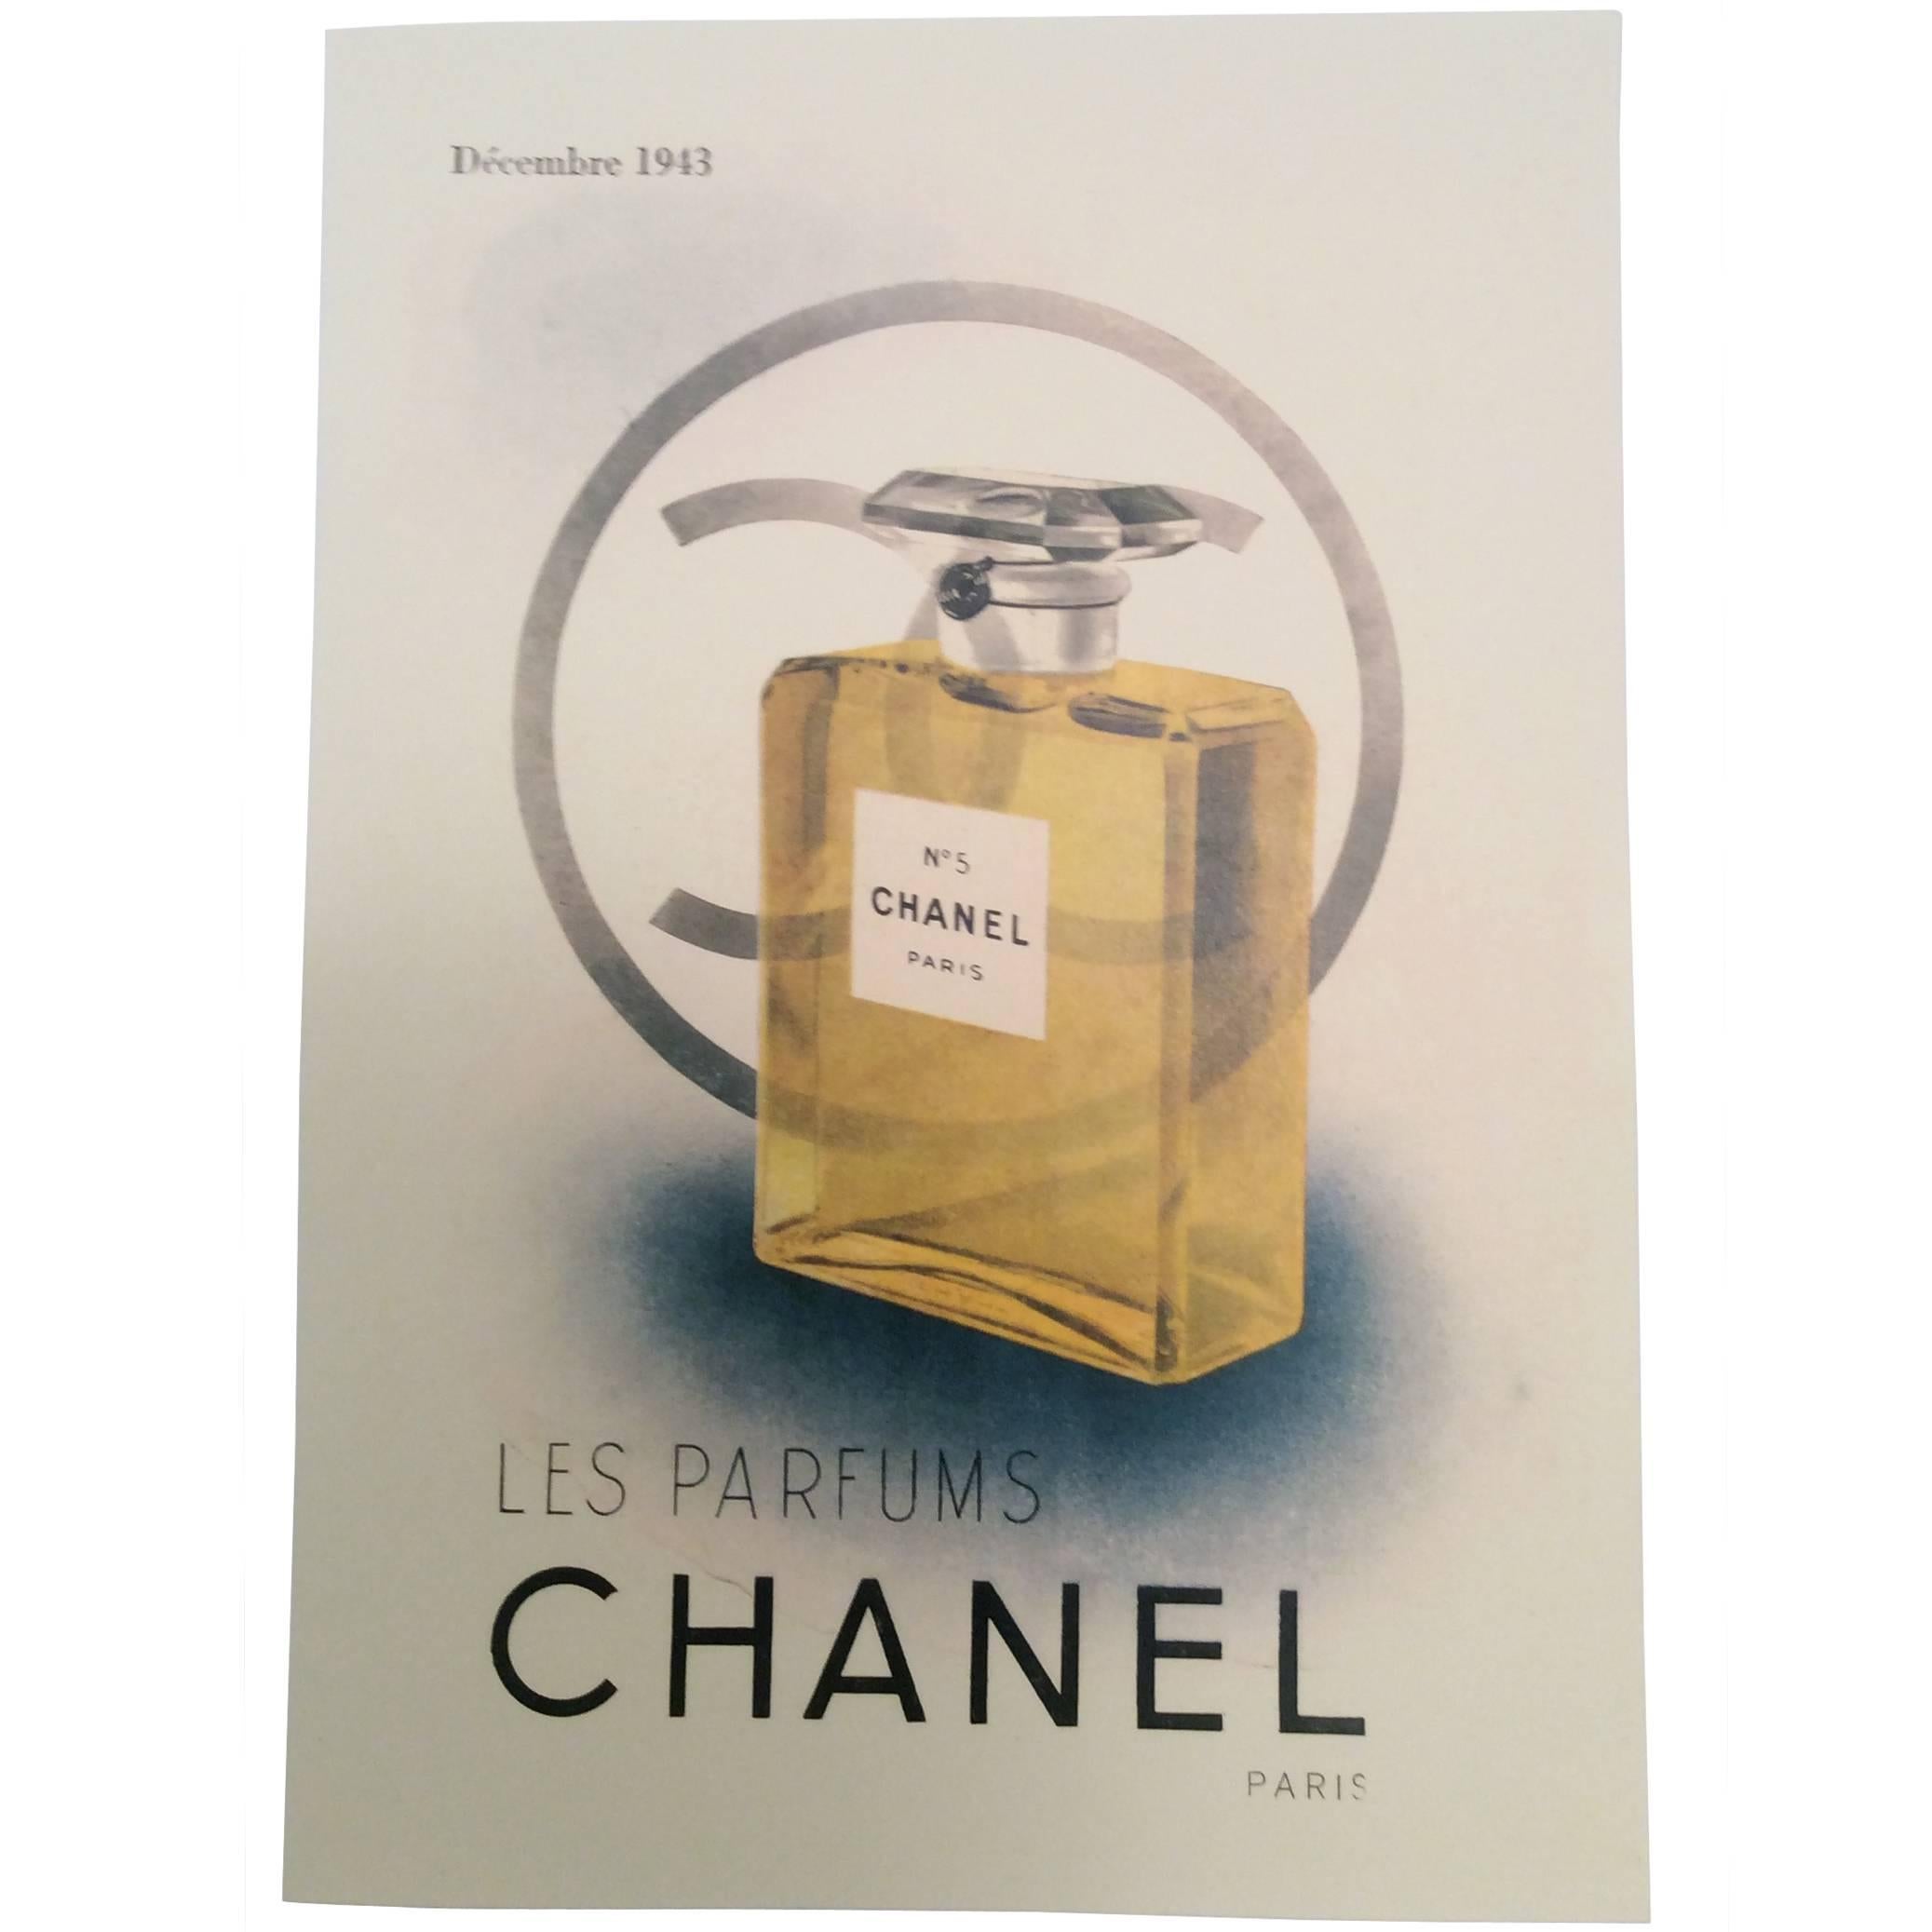 Chanel Perfume Bottle Ad Print - 1940's